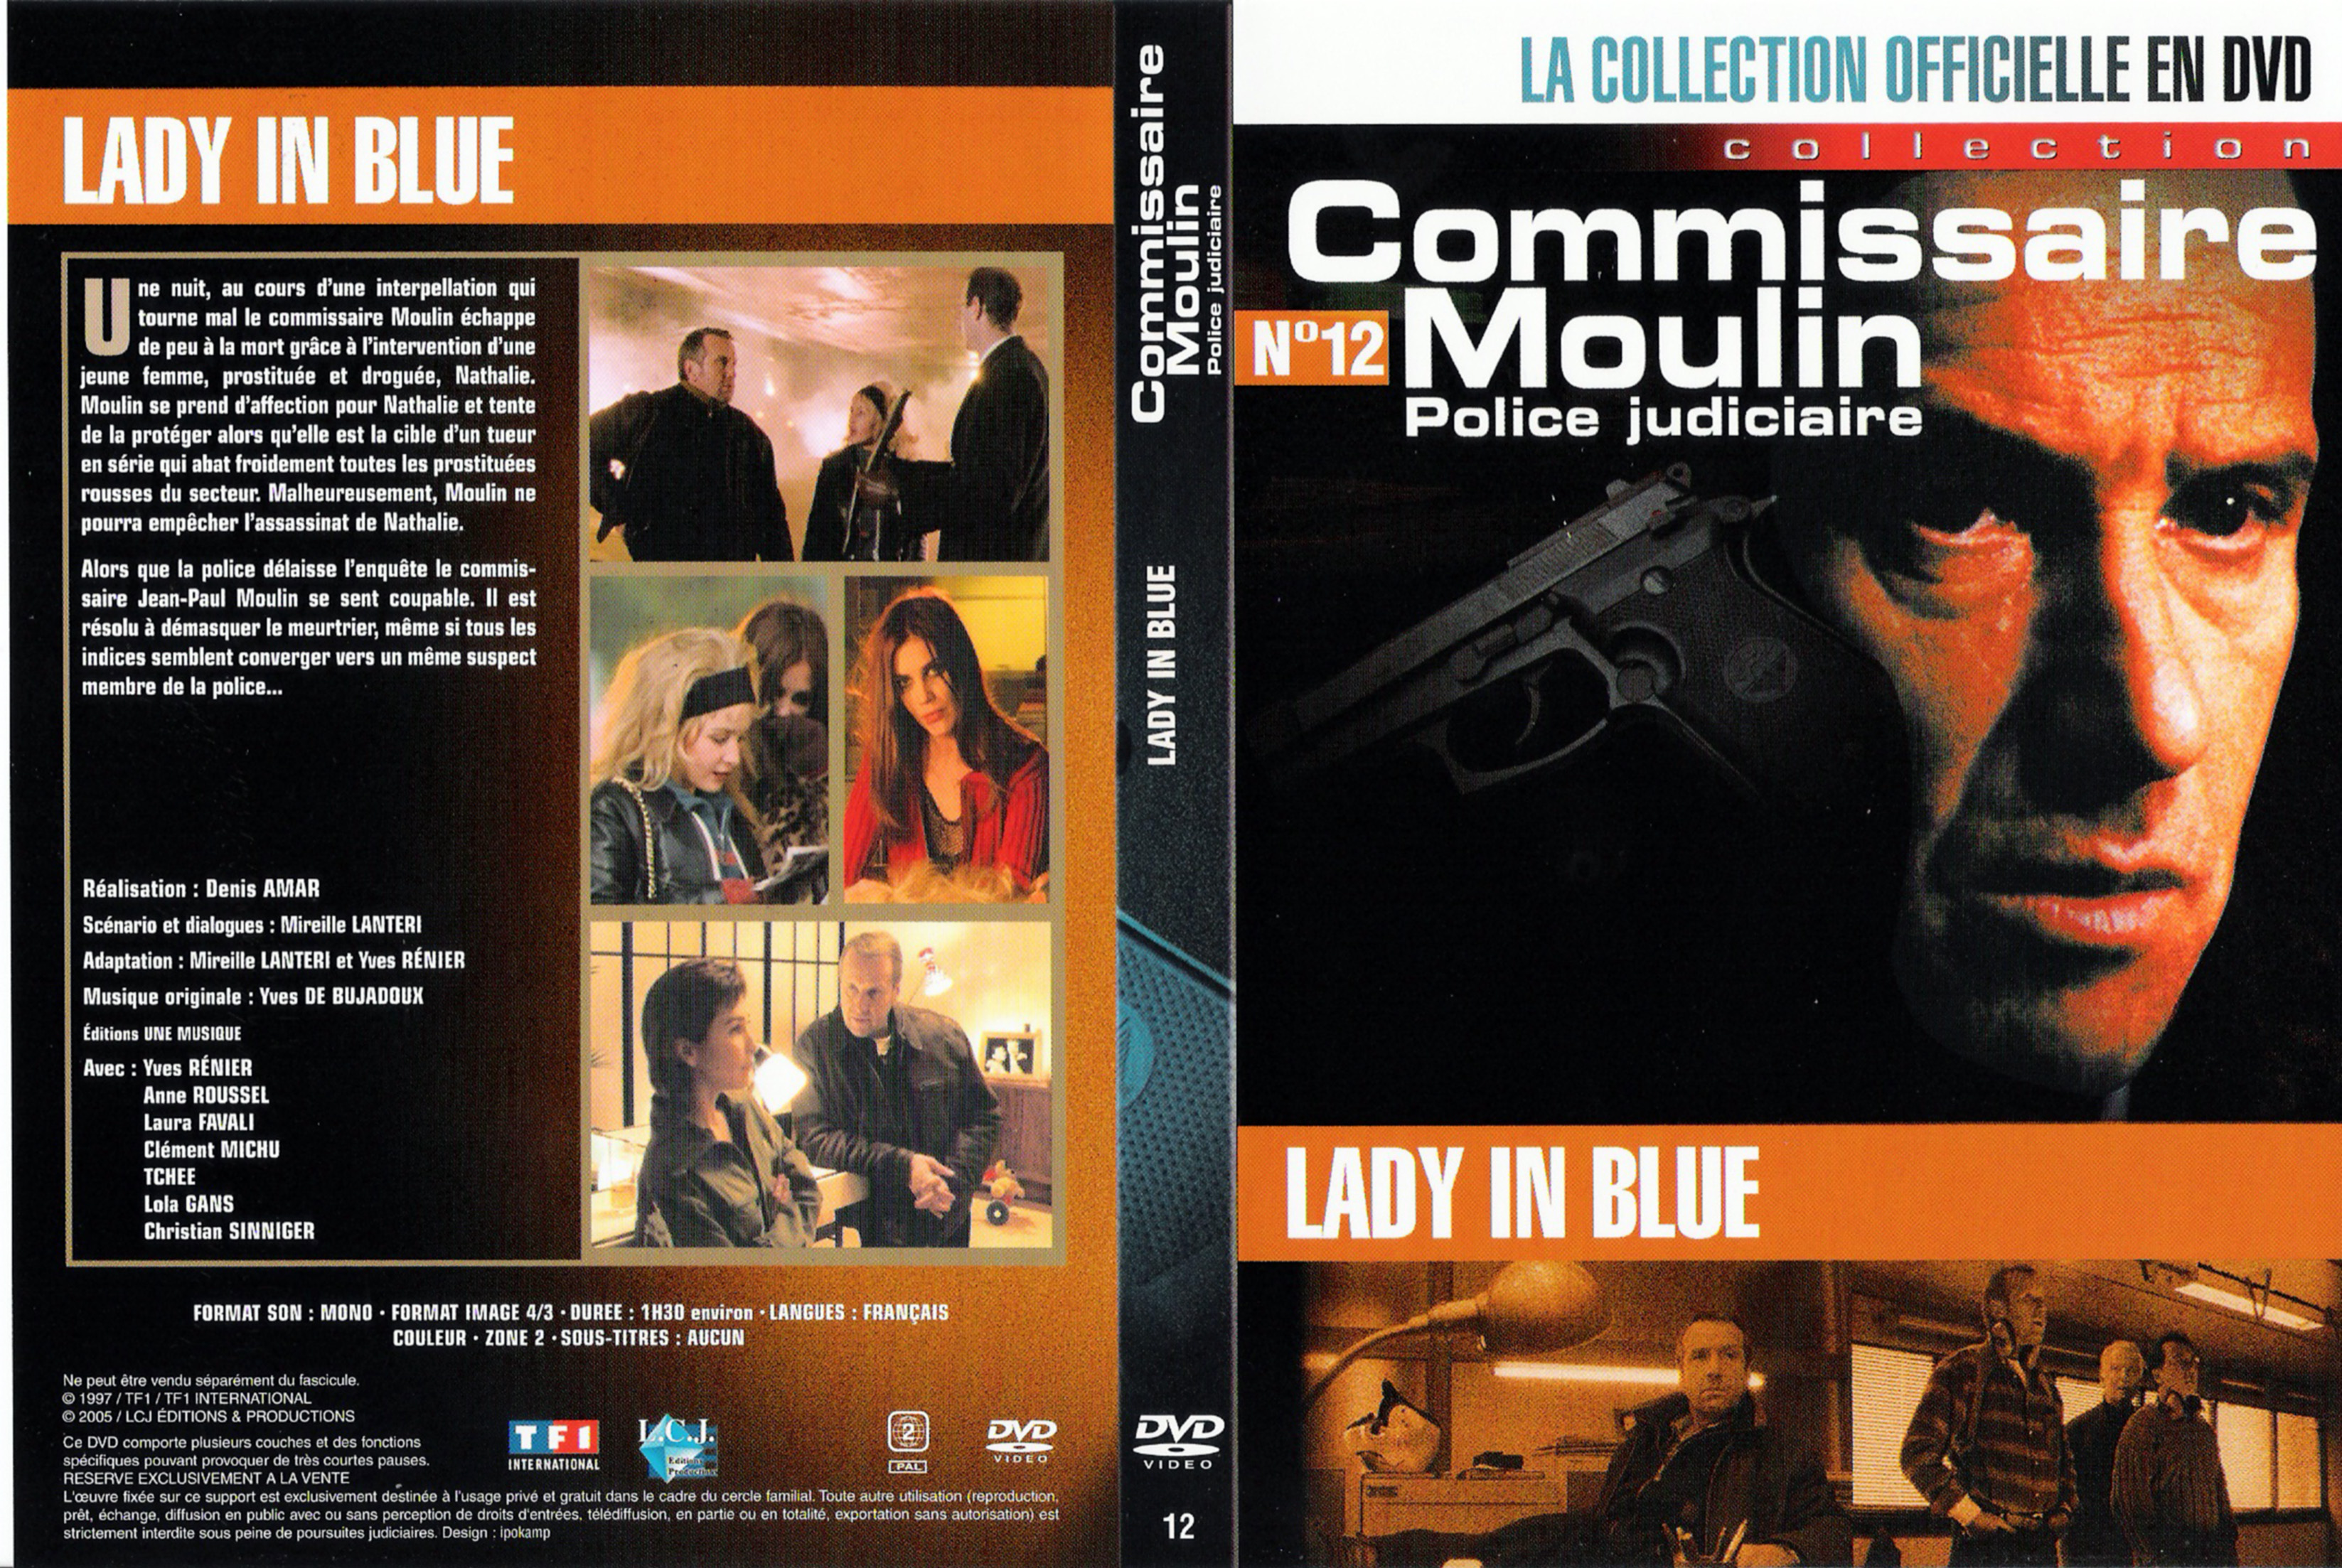 Jaquette DVD Commissaire Moulin - Lady in blue